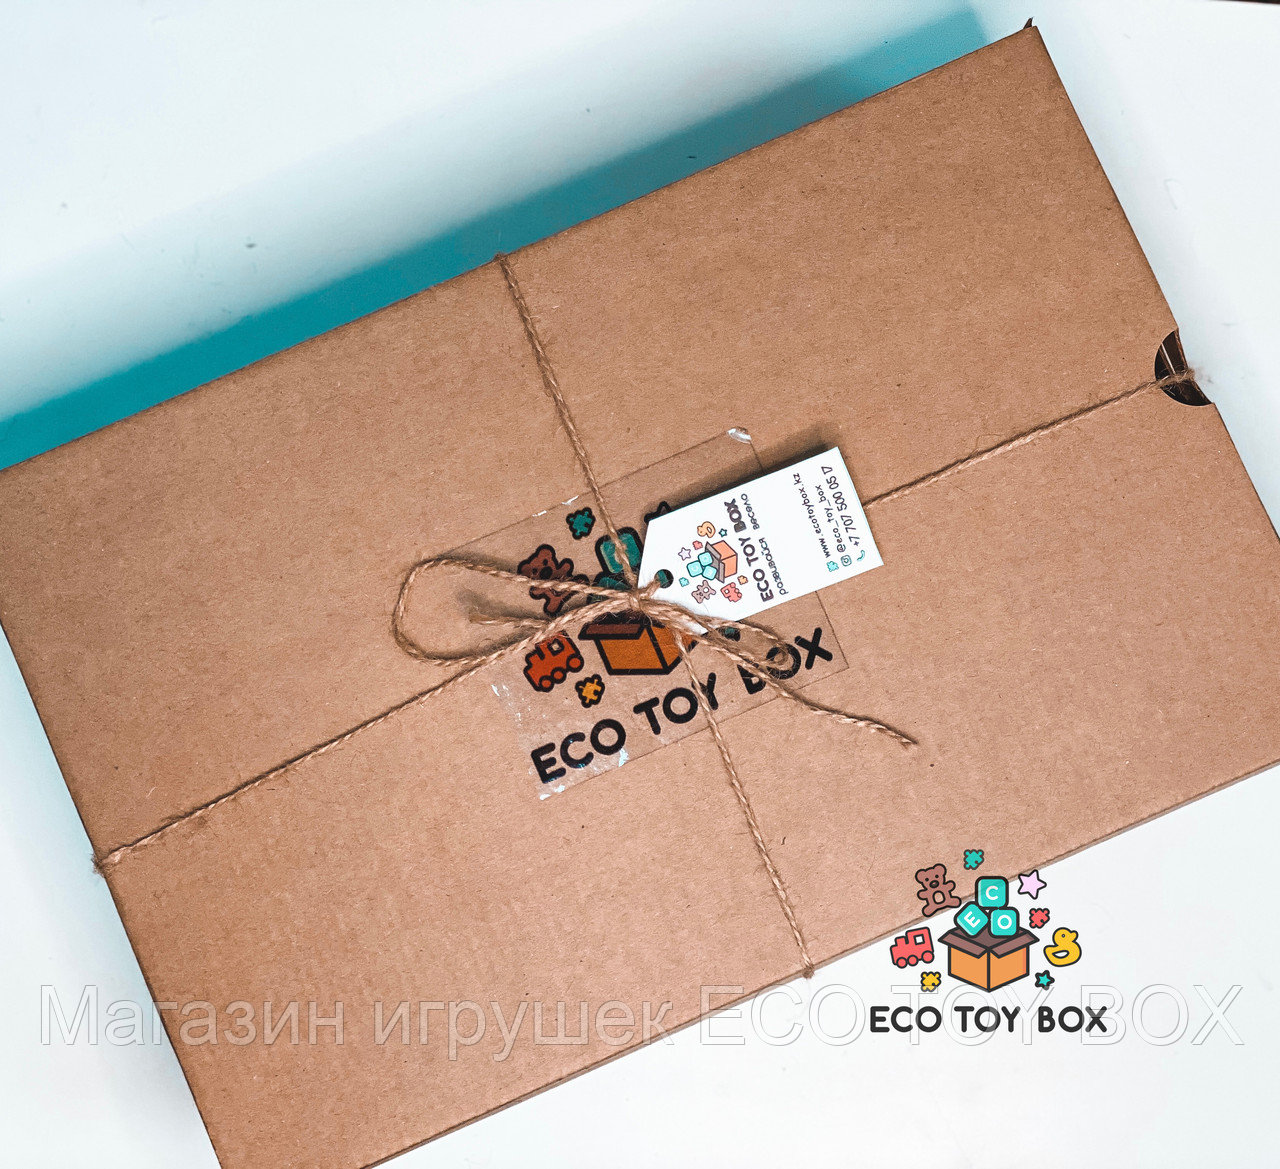 Стандартная коробка ECO TOY BOX БЕСПЛАТНО, фото 1